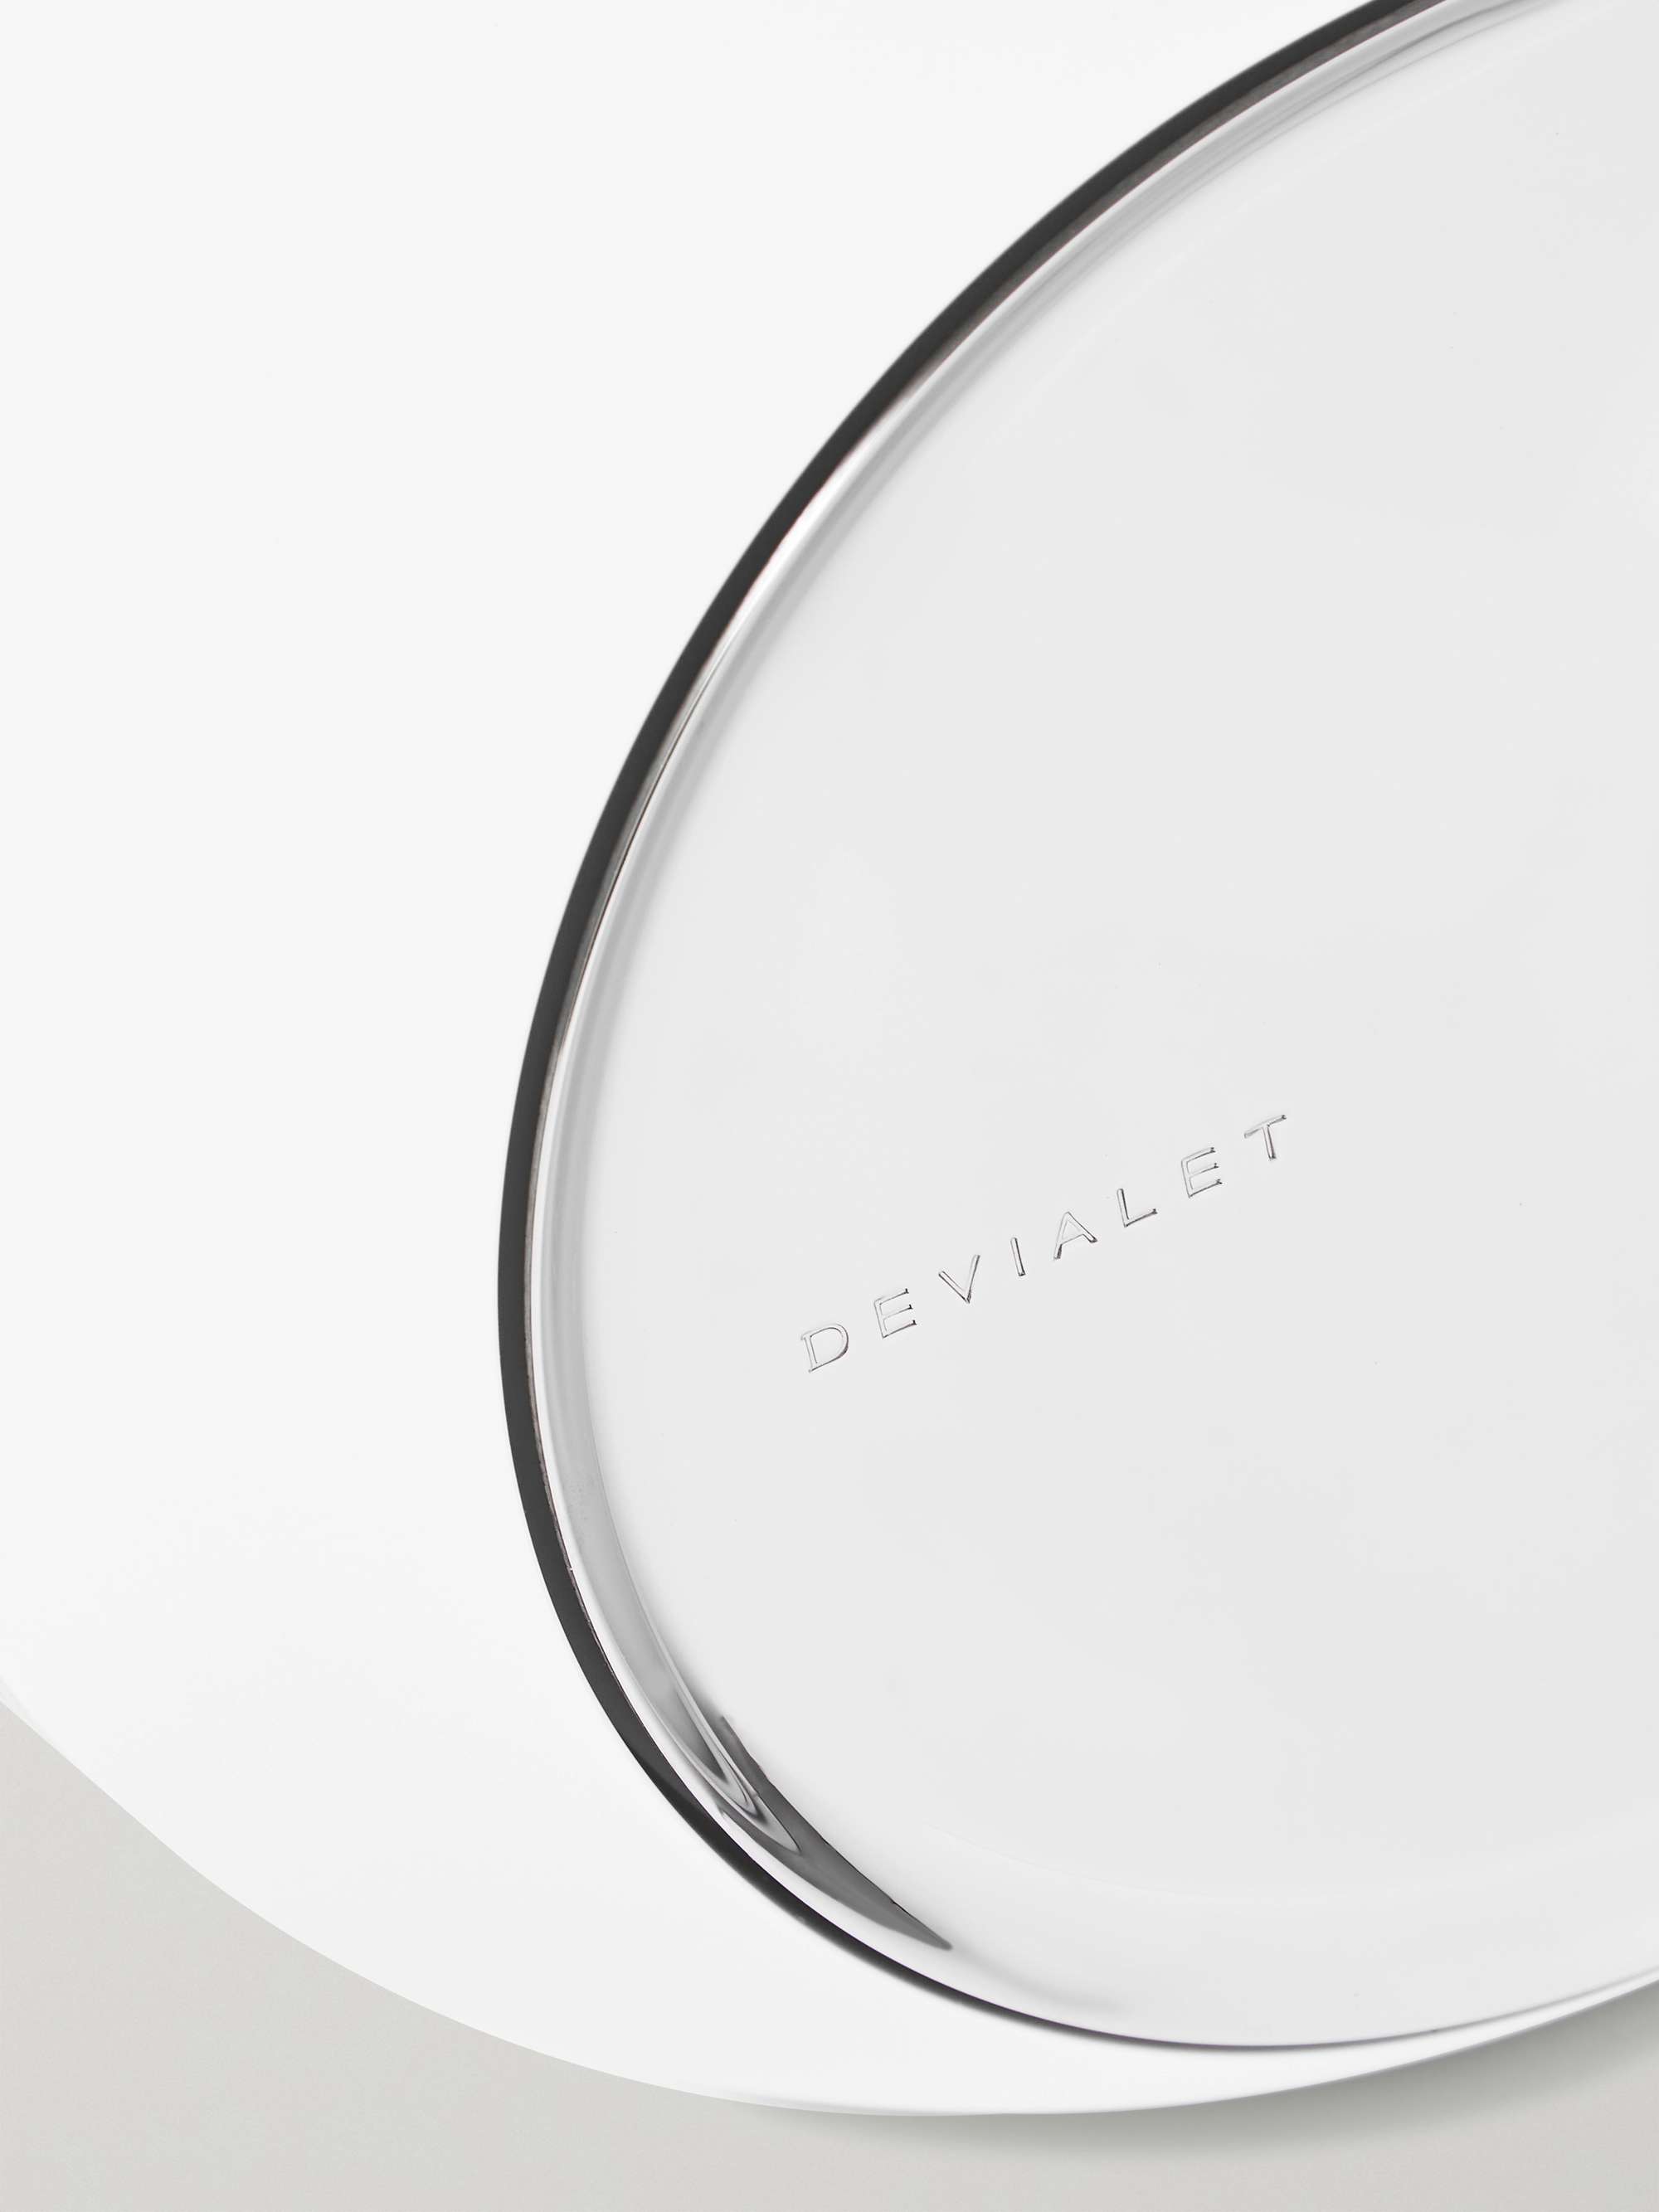 DEVIALET Phantom I 103dB Wireless Speaker